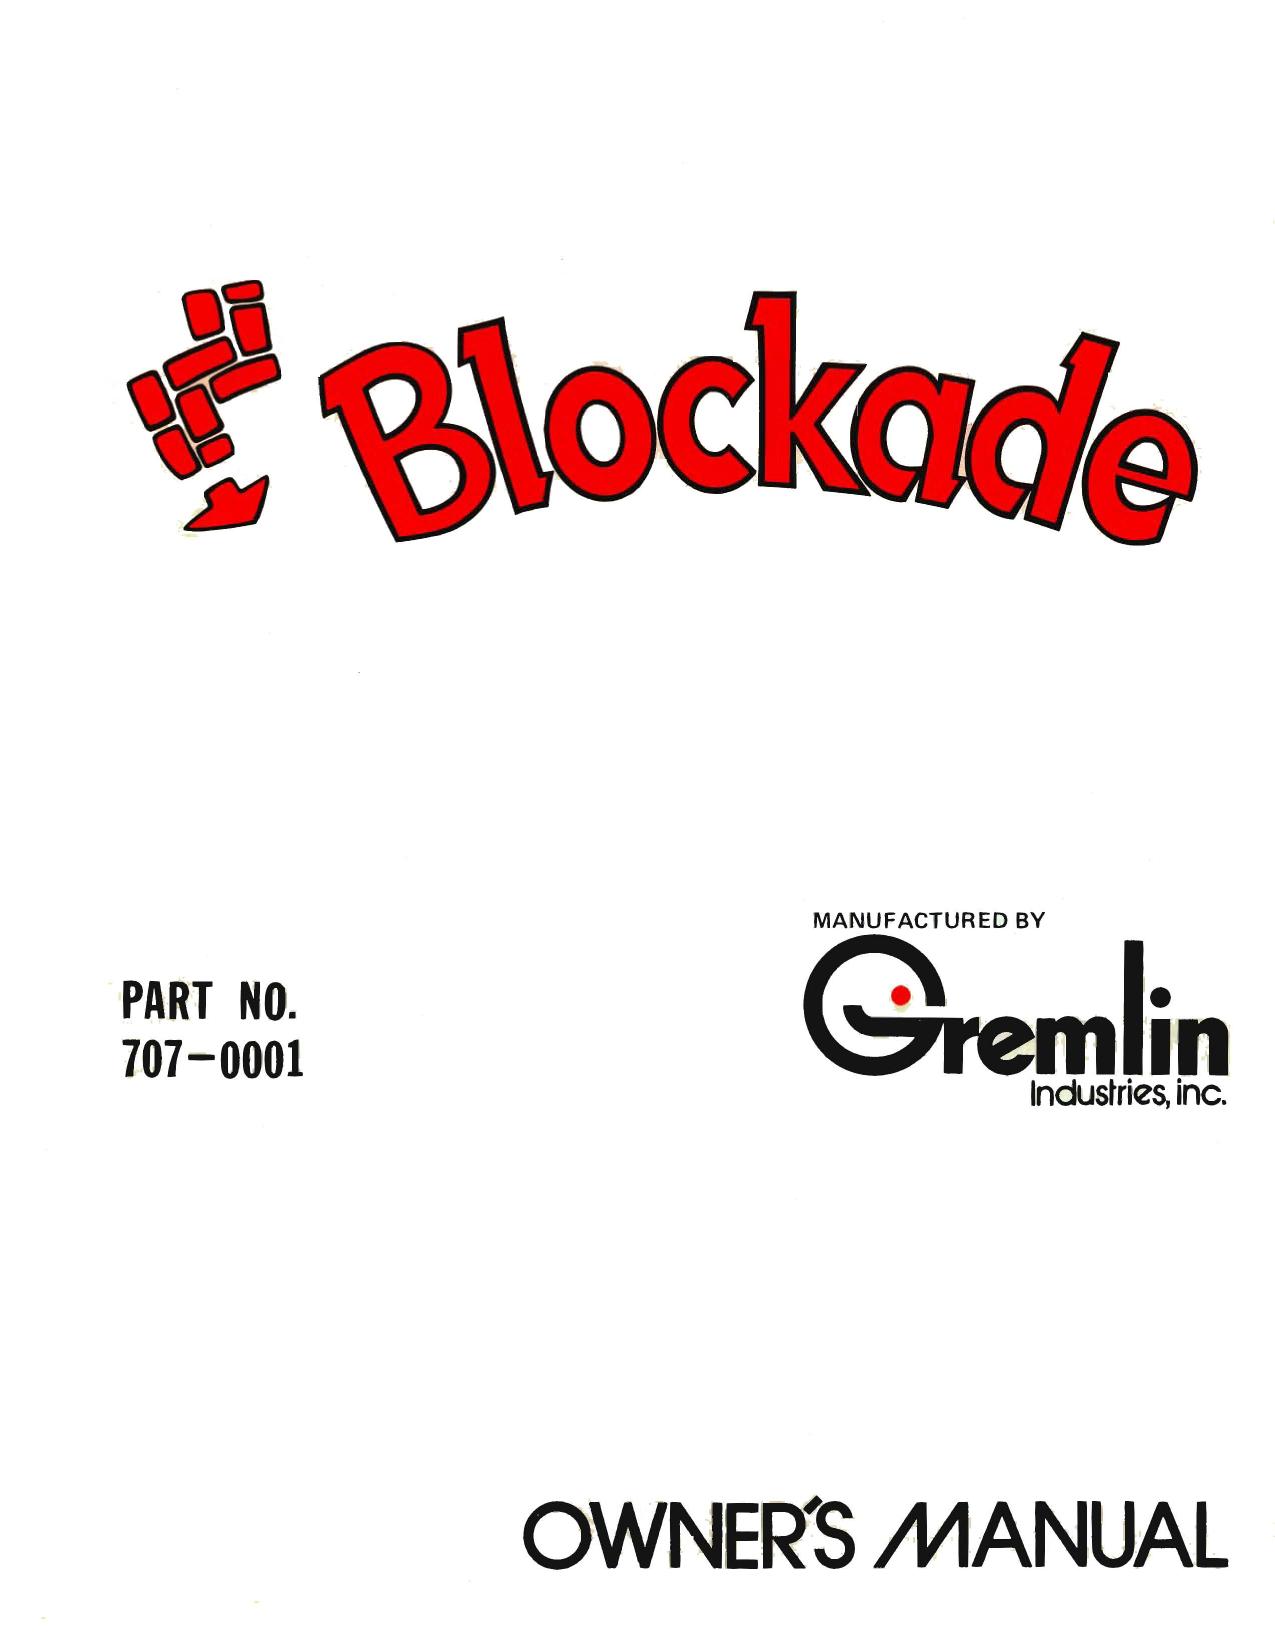 Blockcade